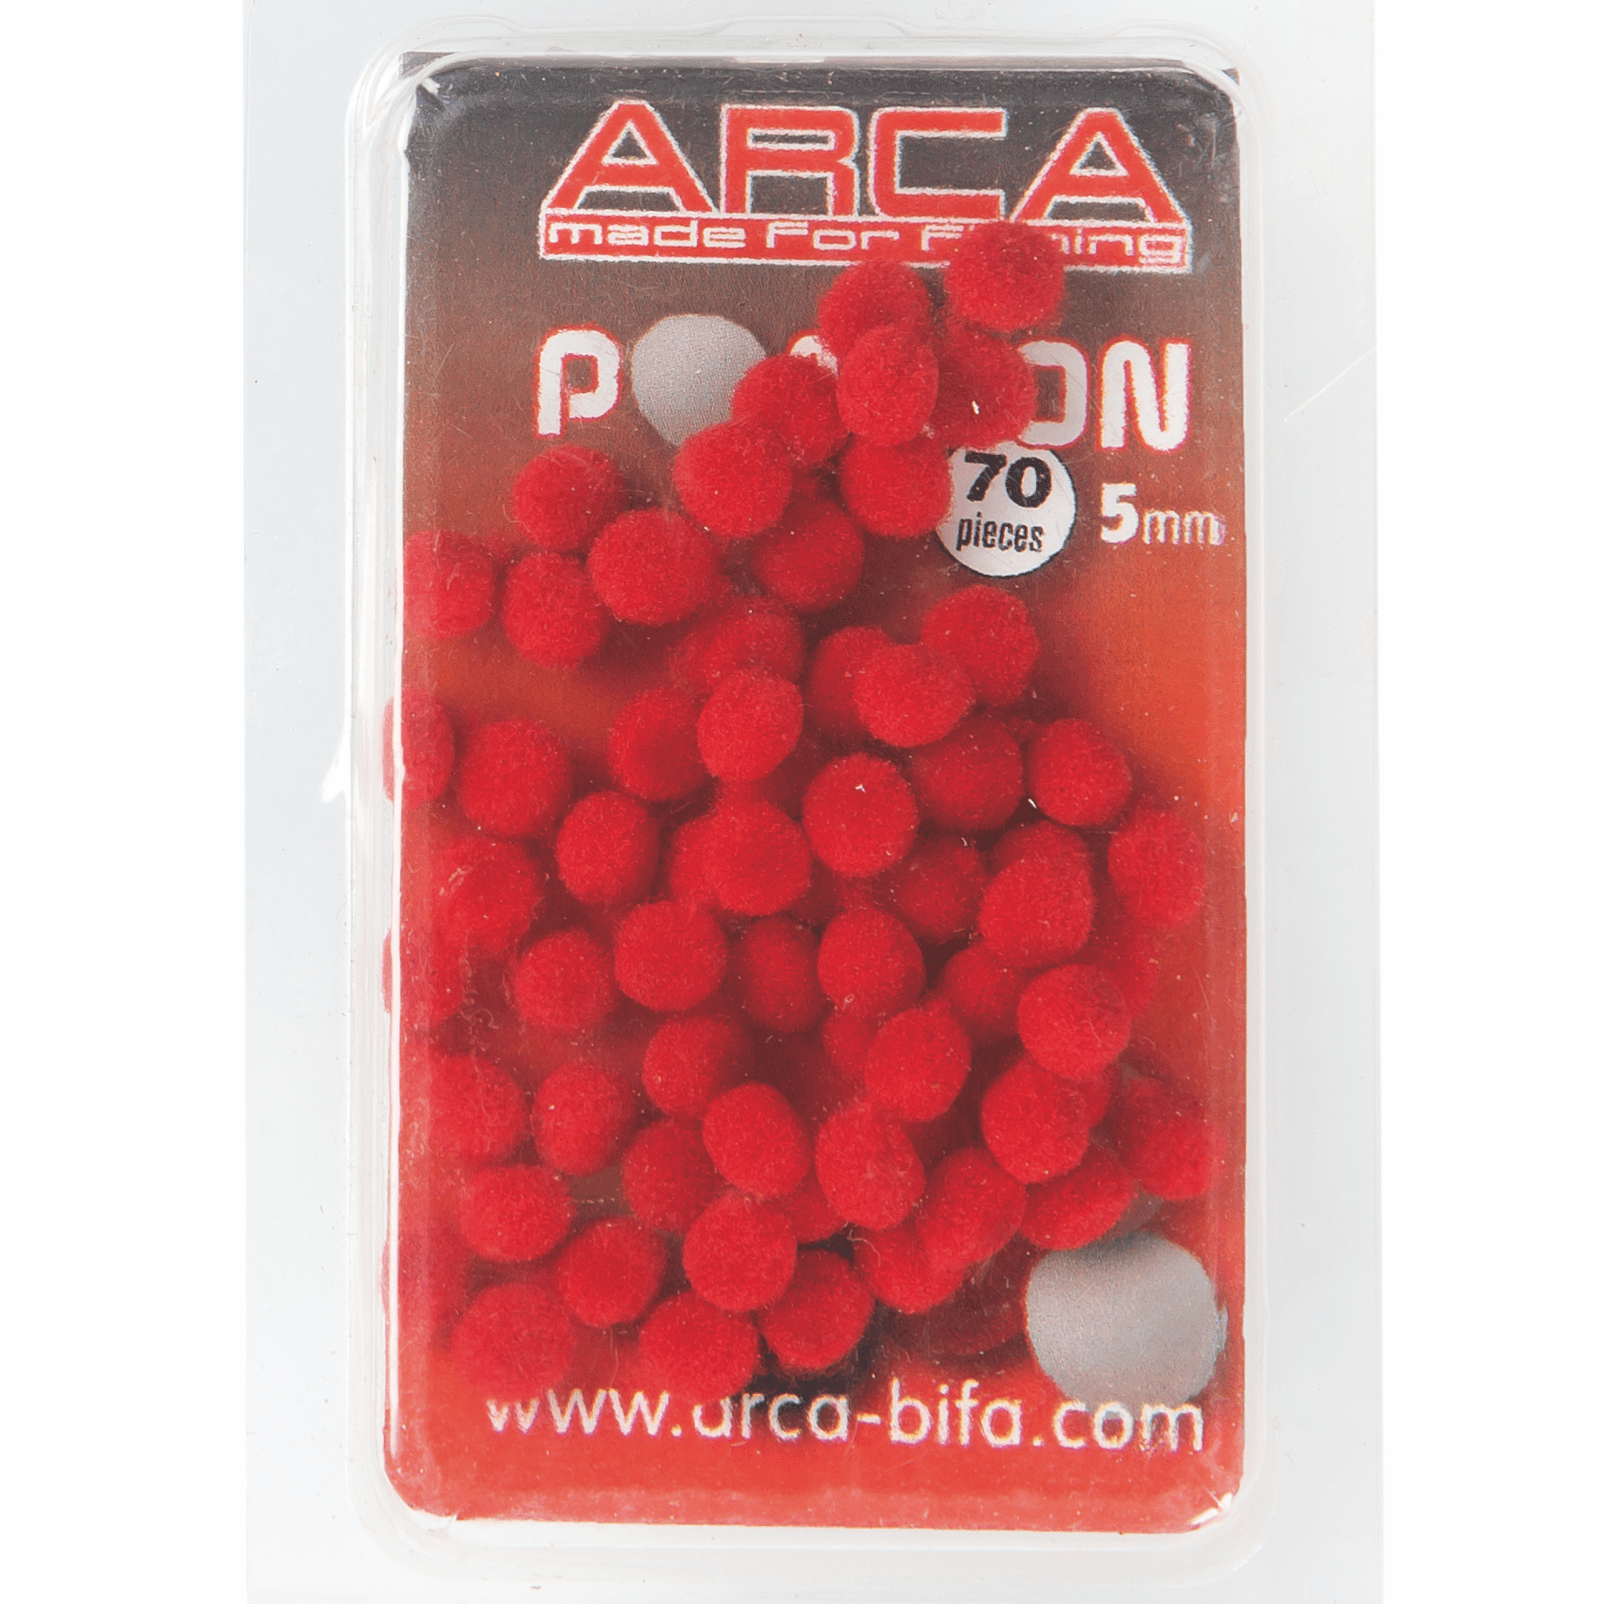 Arca pompon 5mm red